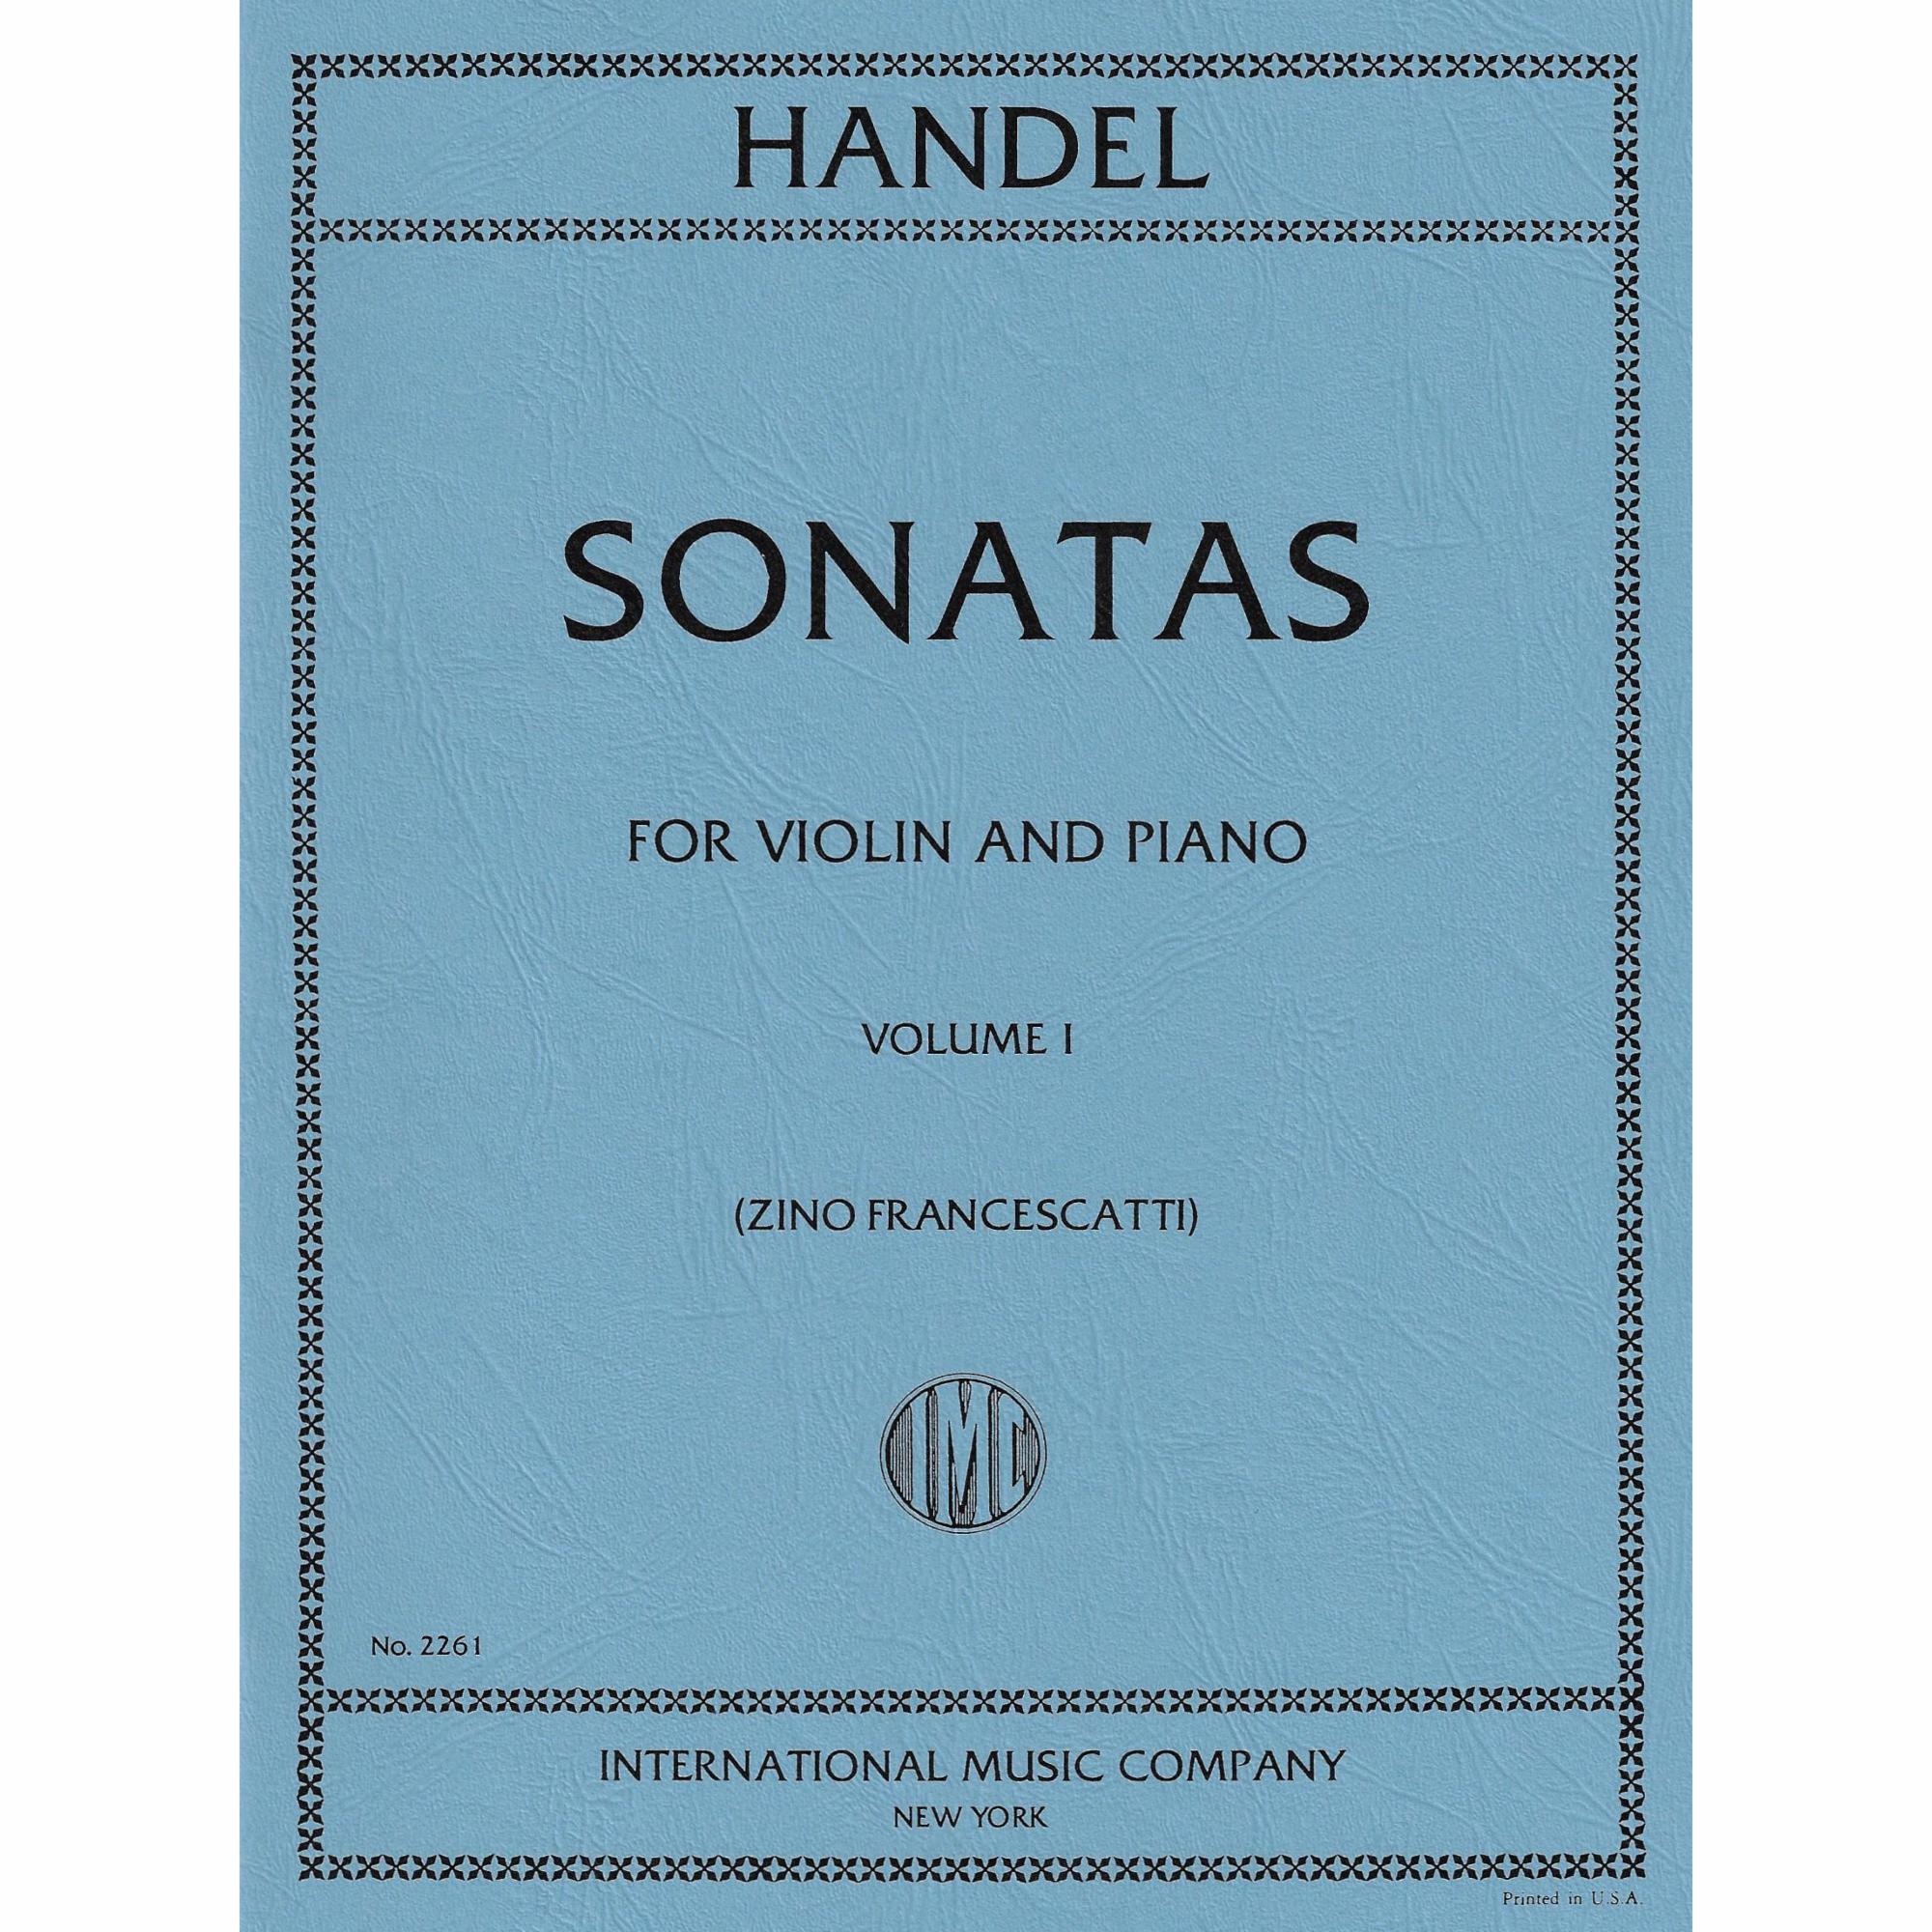 Handel -- Sonatas for Violin and Piano, Vols. I & II for Violin and Piano